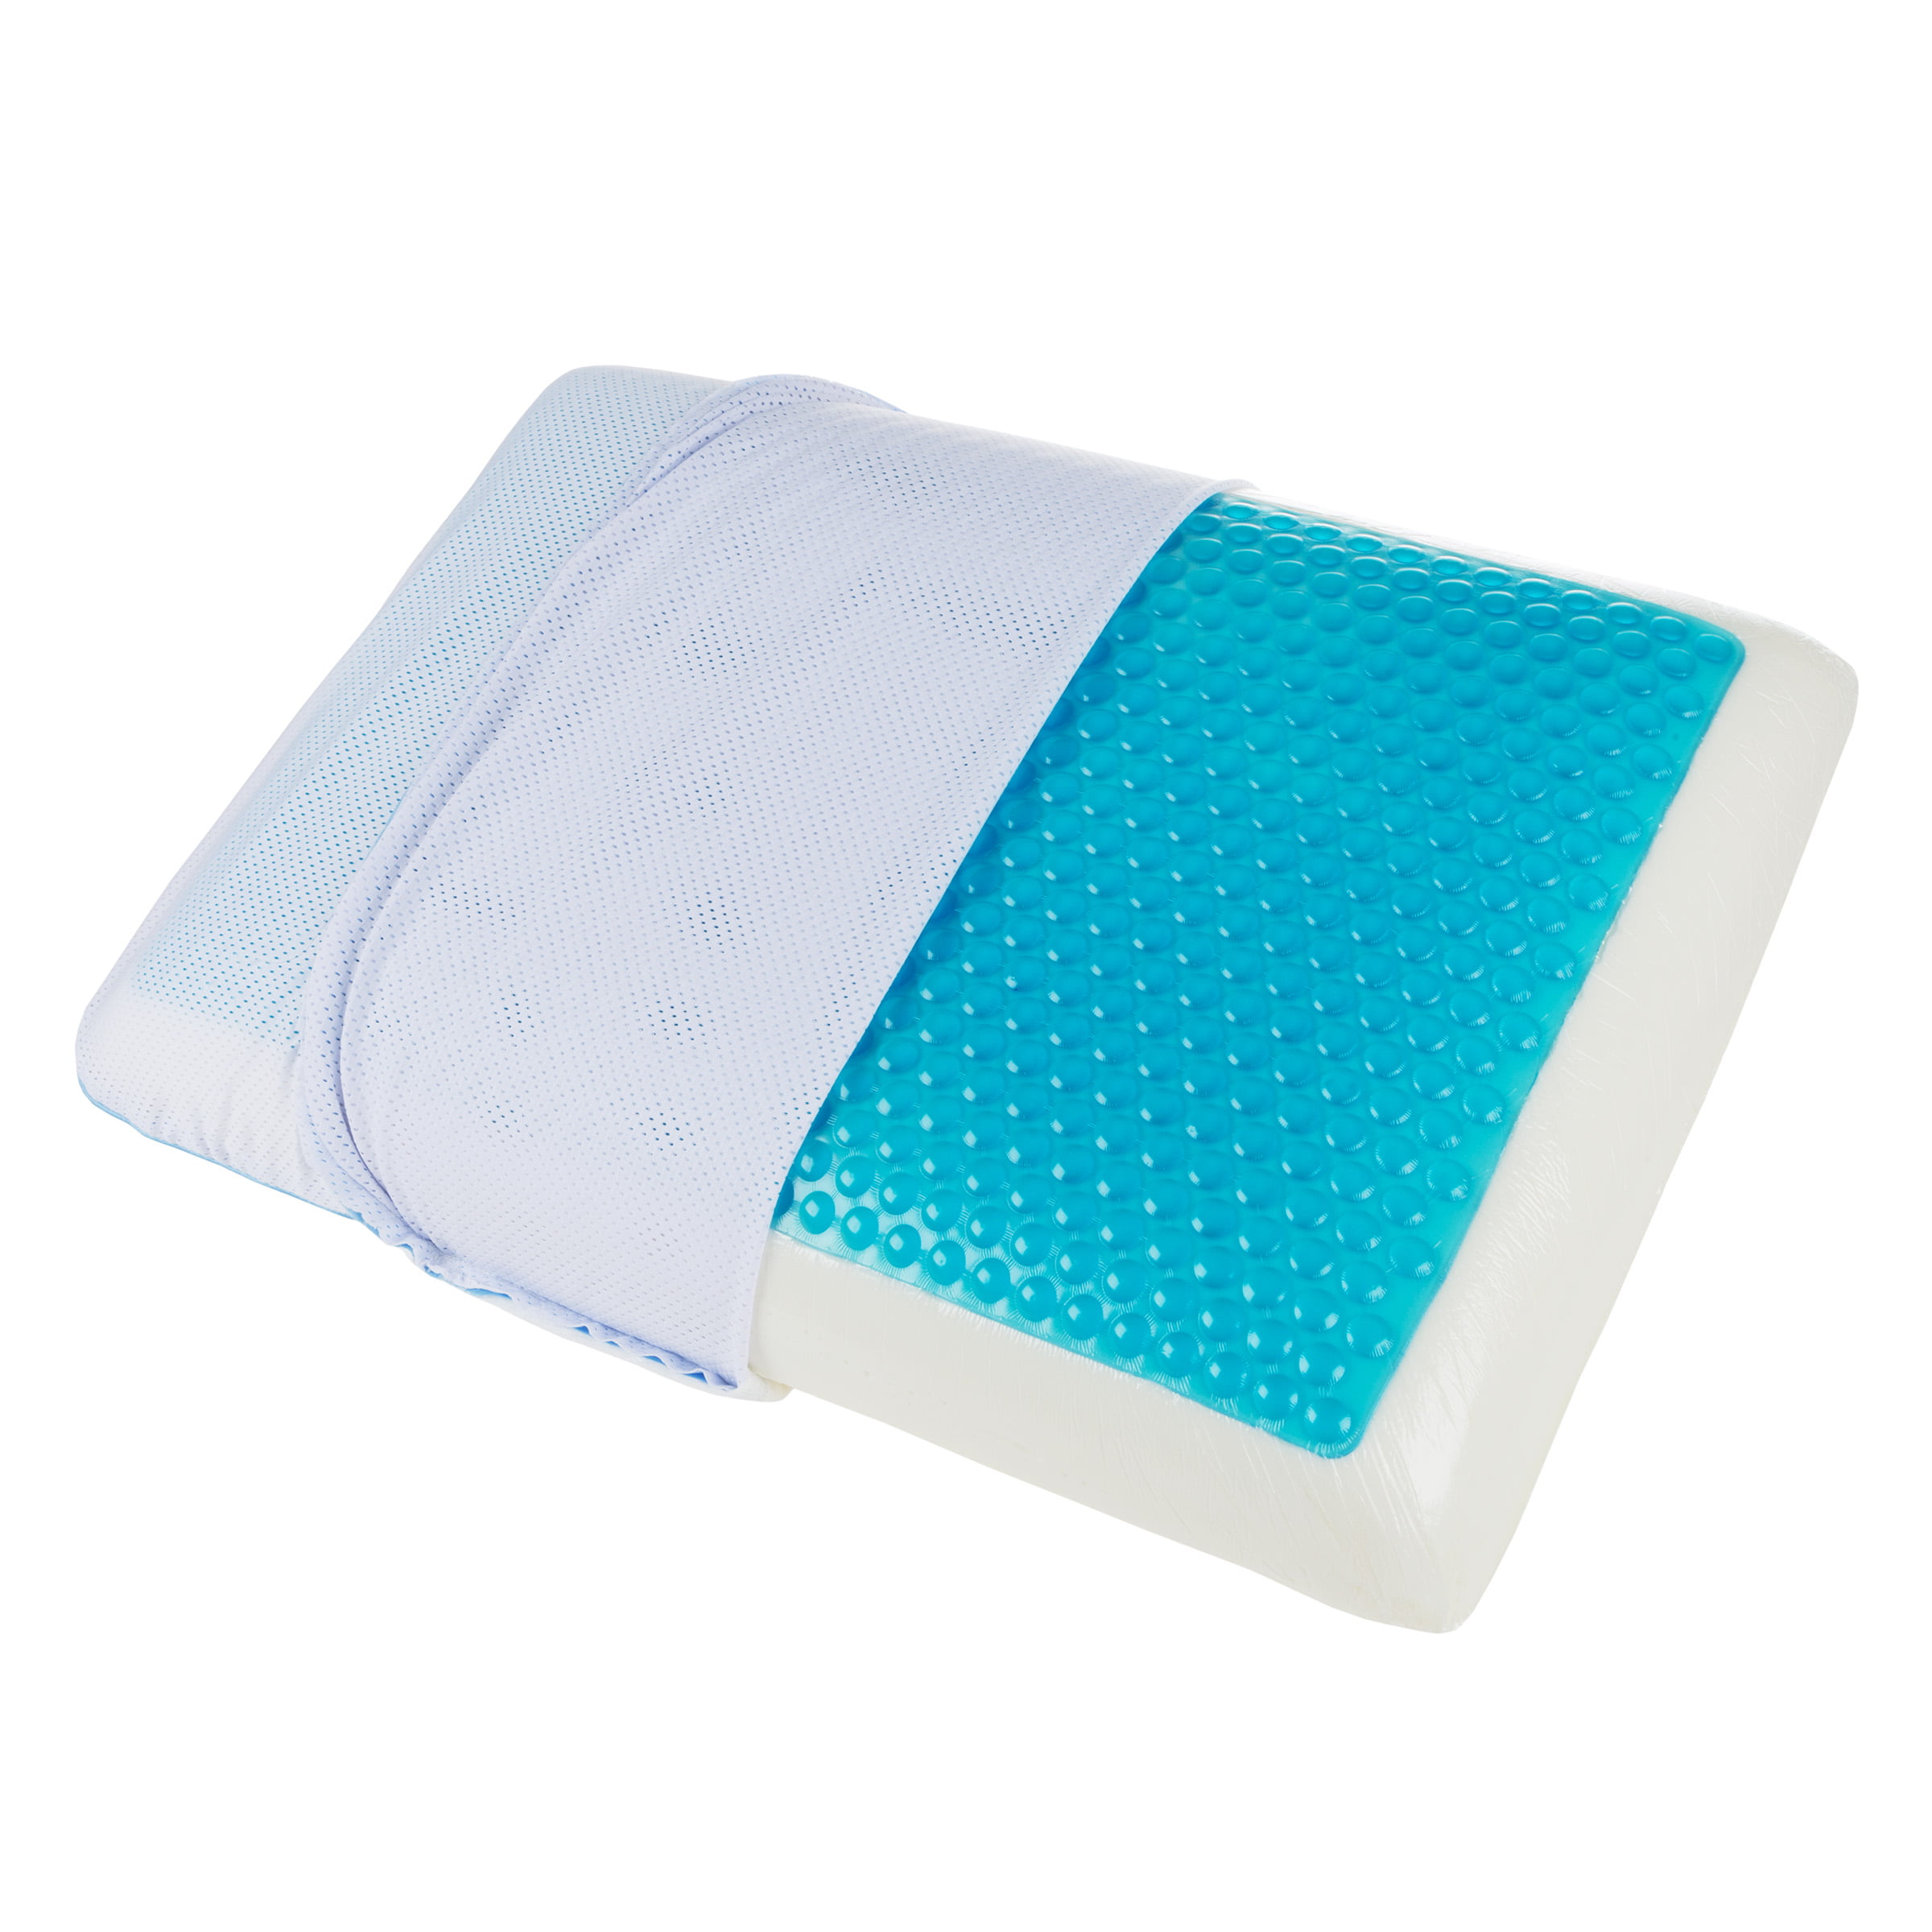 Memory Foam Cooling Gel Pillow Cool Night Sleep Orthopedic Support Comfort Z0M5 